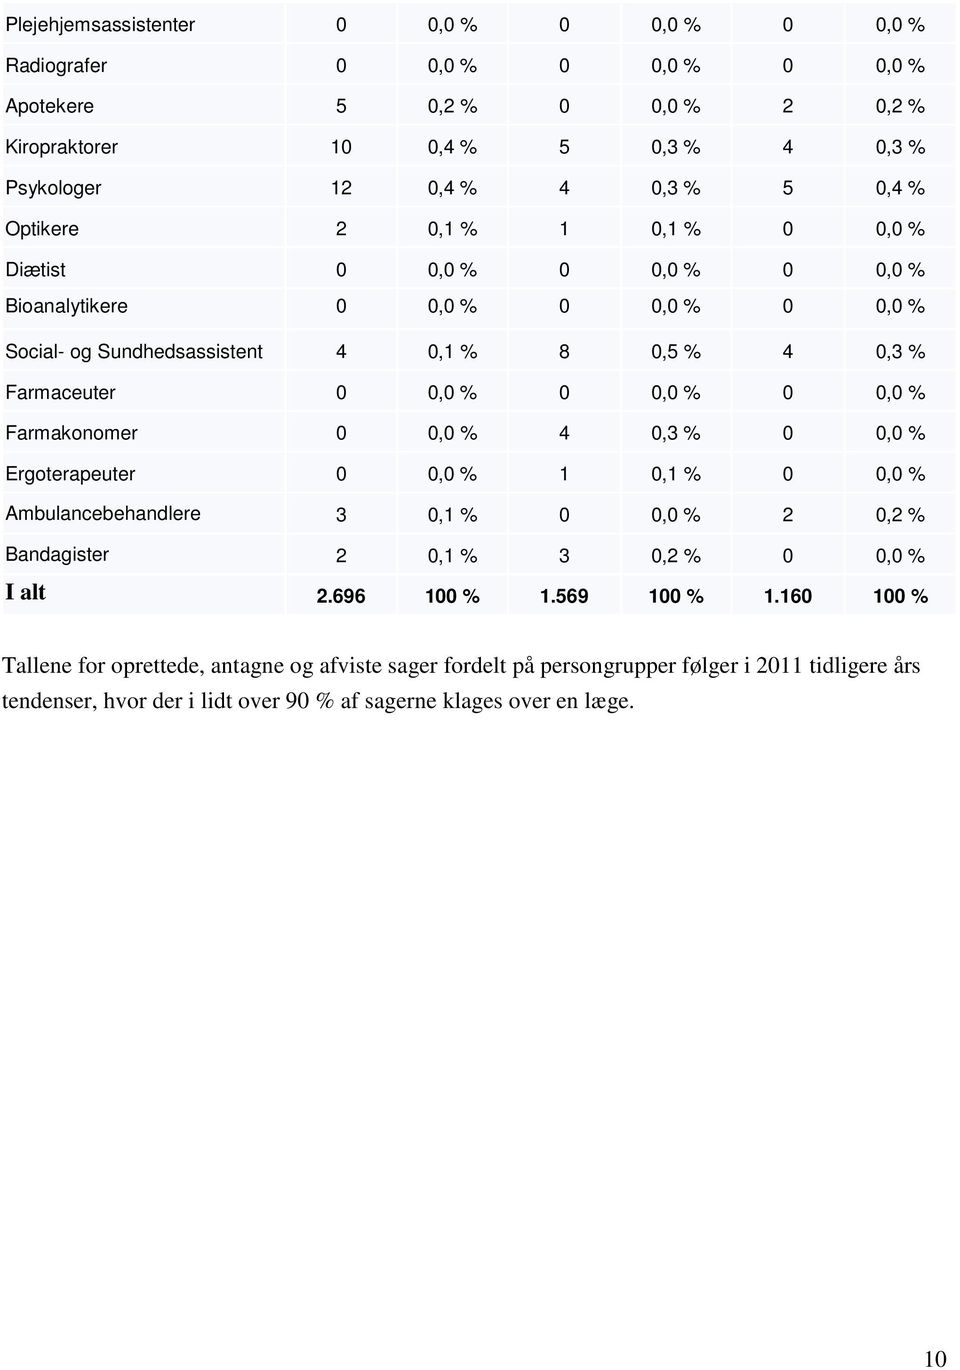 0,0 % Farmakonomer 0 0,0 % 4 0,3 % 0 0,0 % Ergoterapeuter 0 0,0 % 1 0,1 % 0 0,0 % Ambulancebehandlere 3 0,1 % 0 0,0 % 2 0,2 % Bandagister 2 0,1 % 3 0,2 % 0 0,0 % I alt 2.696 100 % 1.